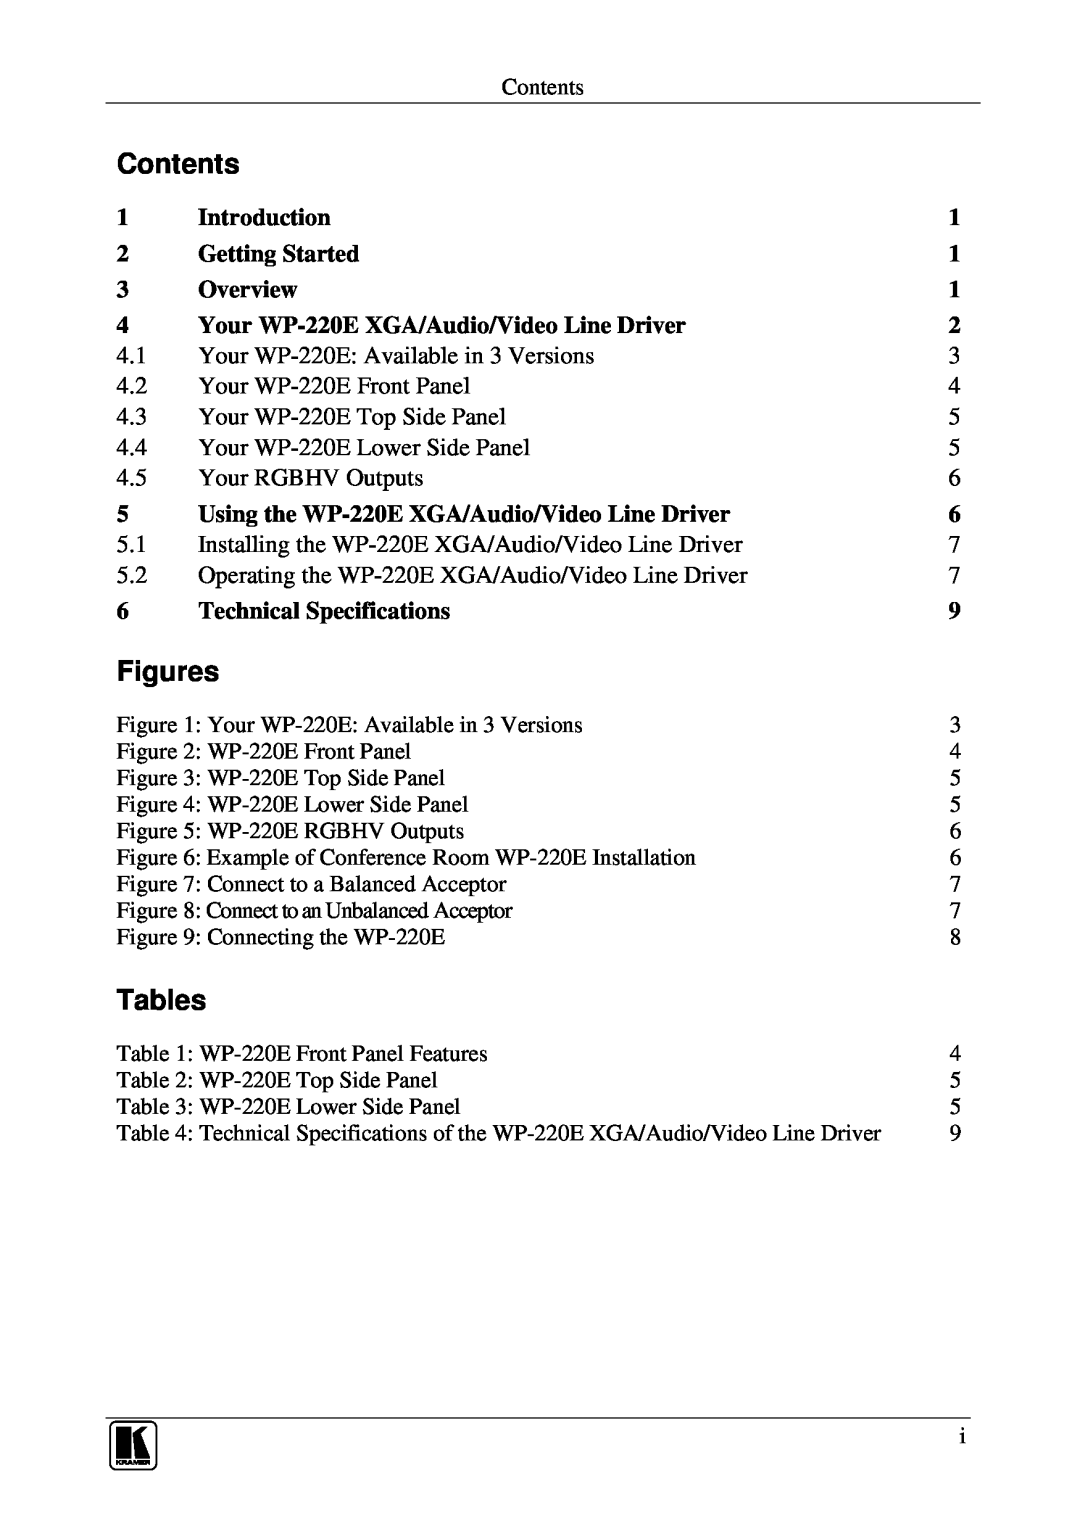 Kramer Electronics WP-220E user manual Contents, Figures, Tables 